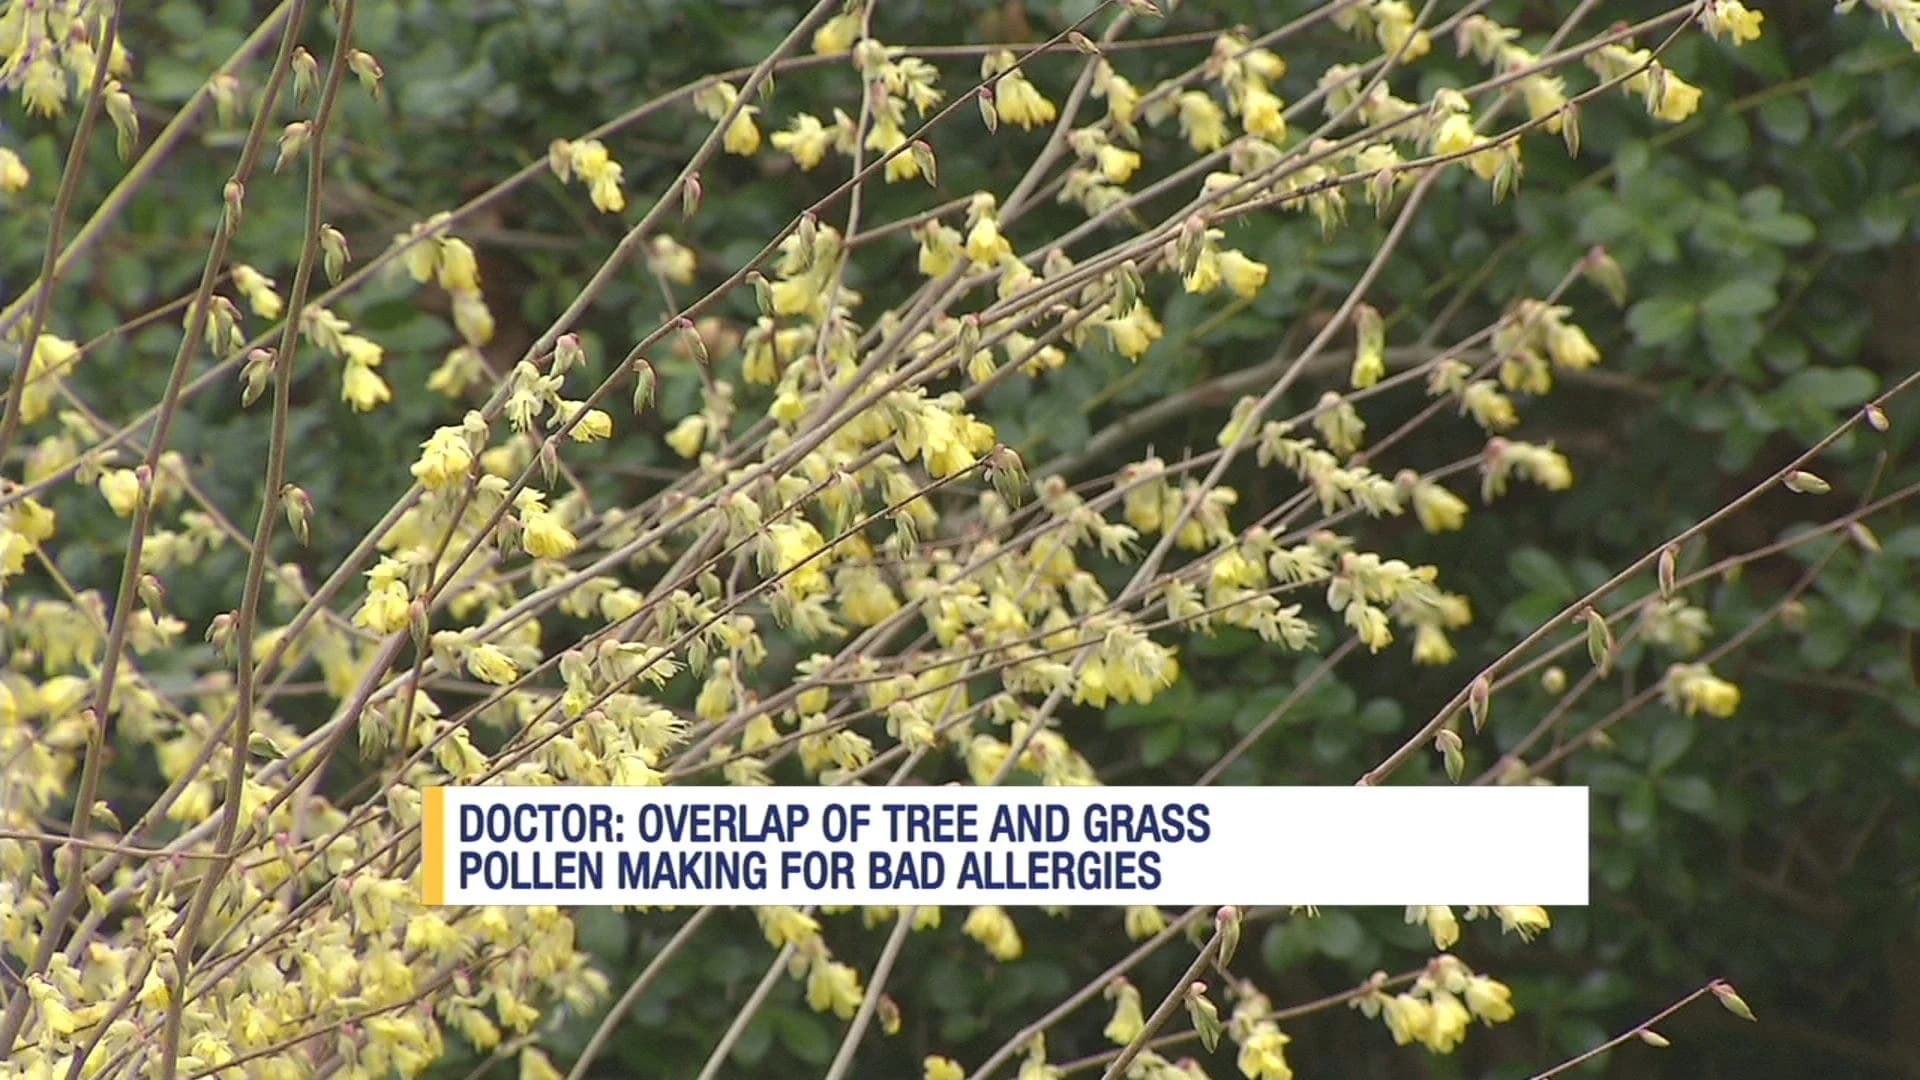 Grass, tree pollen seasons offer double allergy hit